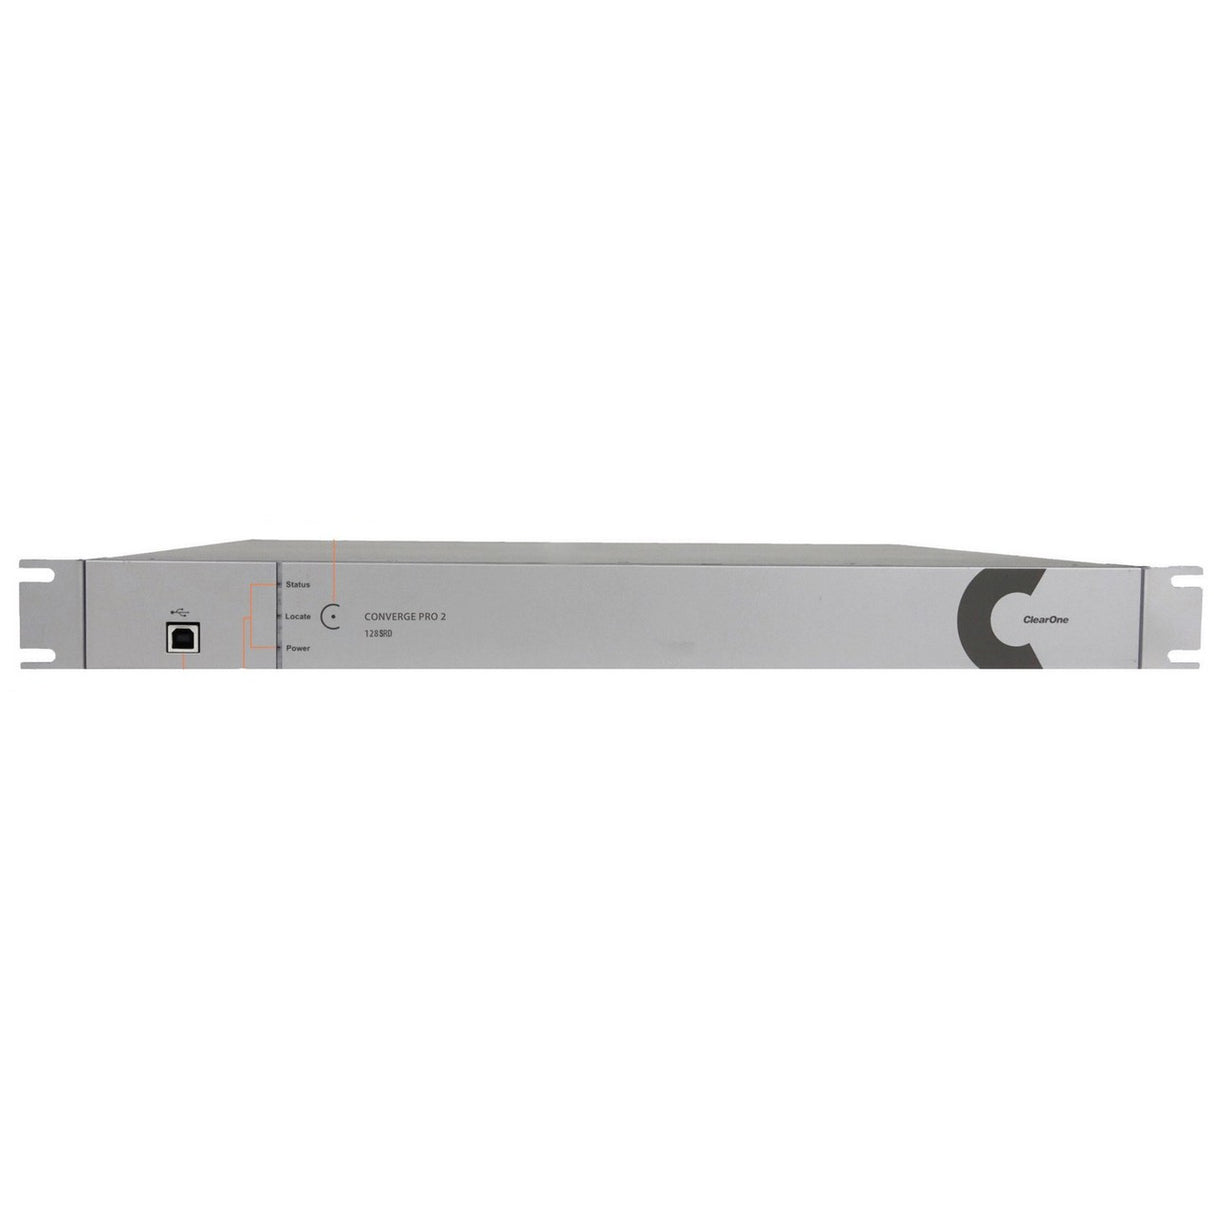 Clearone 910-3200-101-D | Converge Pro 2 128SRD Sound Reinforcement DSP Dante Mixer